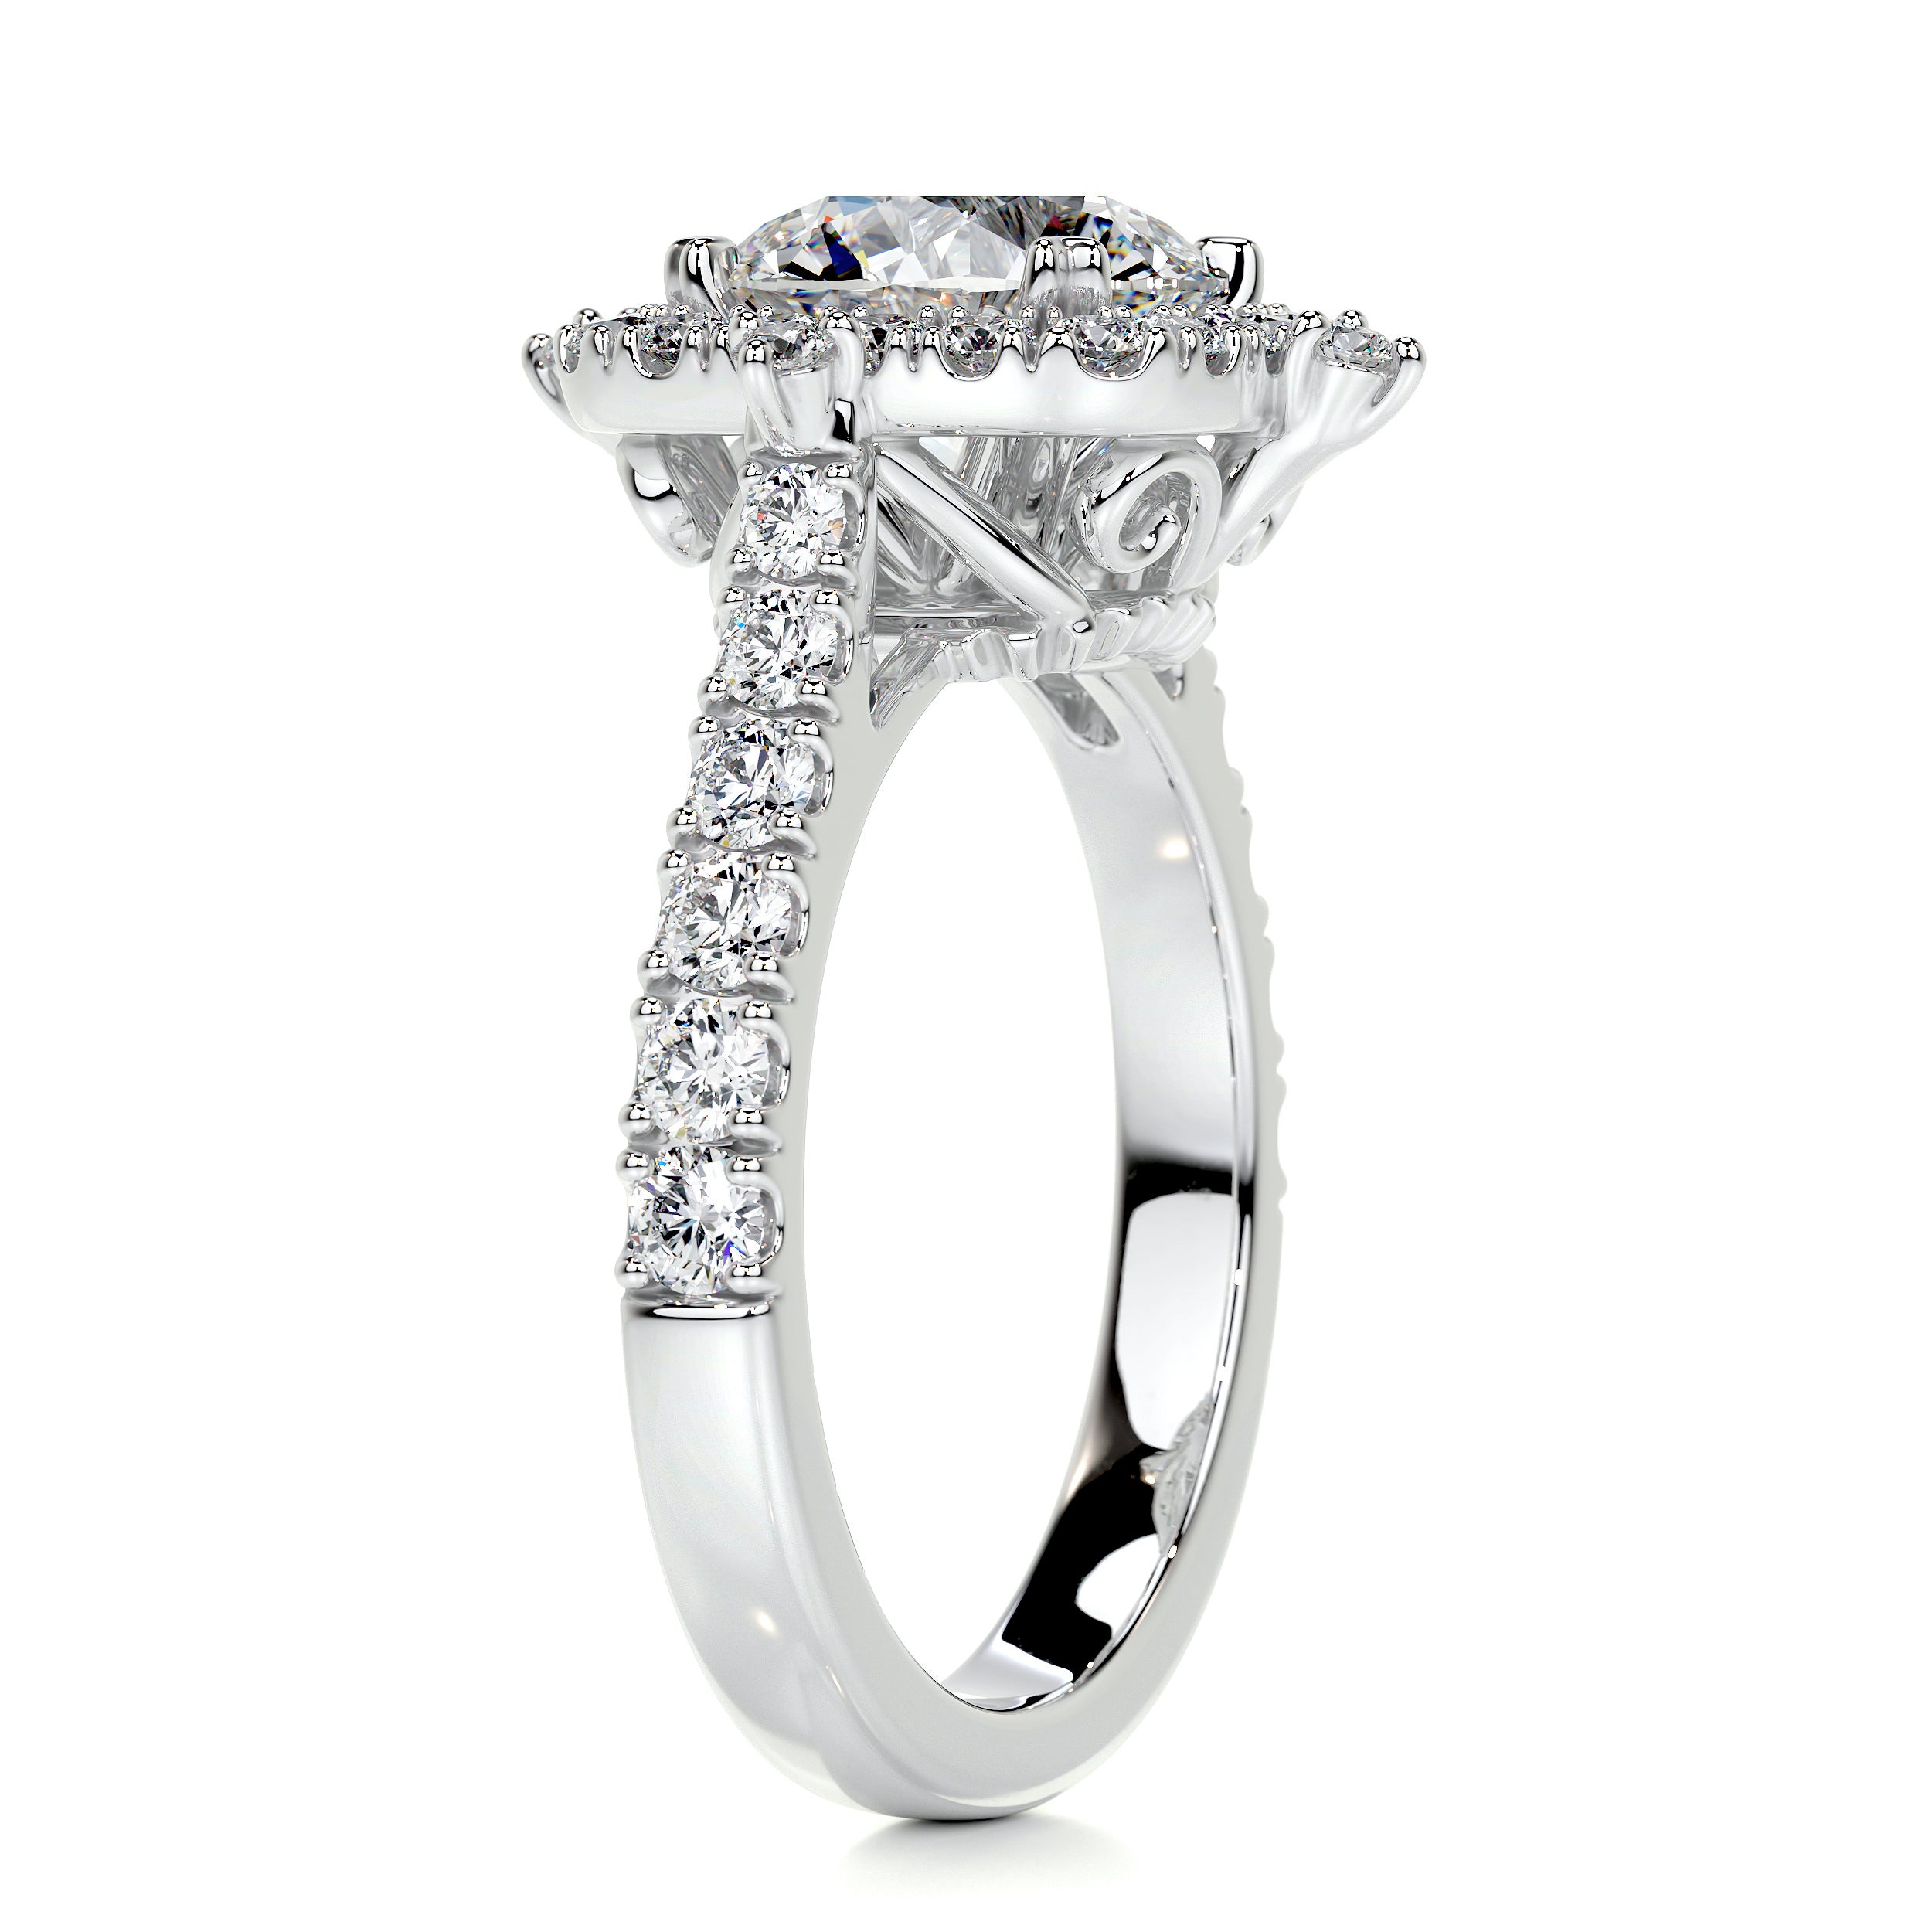 Francesca Diamond Engagement Ring   (2 Carat) -14K White Gold